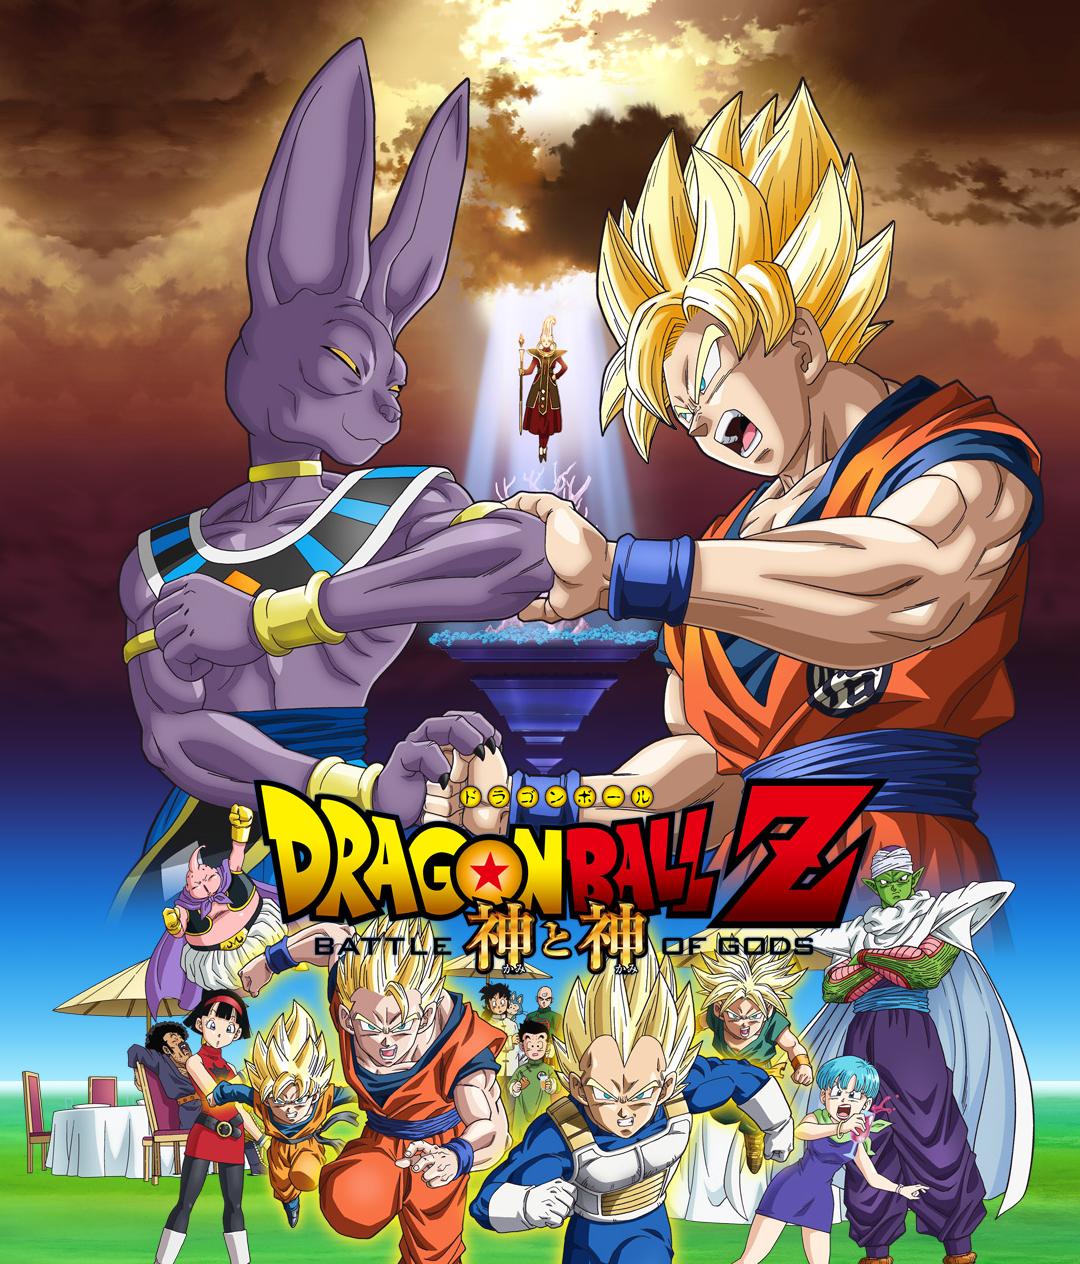 Dragon Ball Z: Battle of Gods - Extended Edition Trailer 